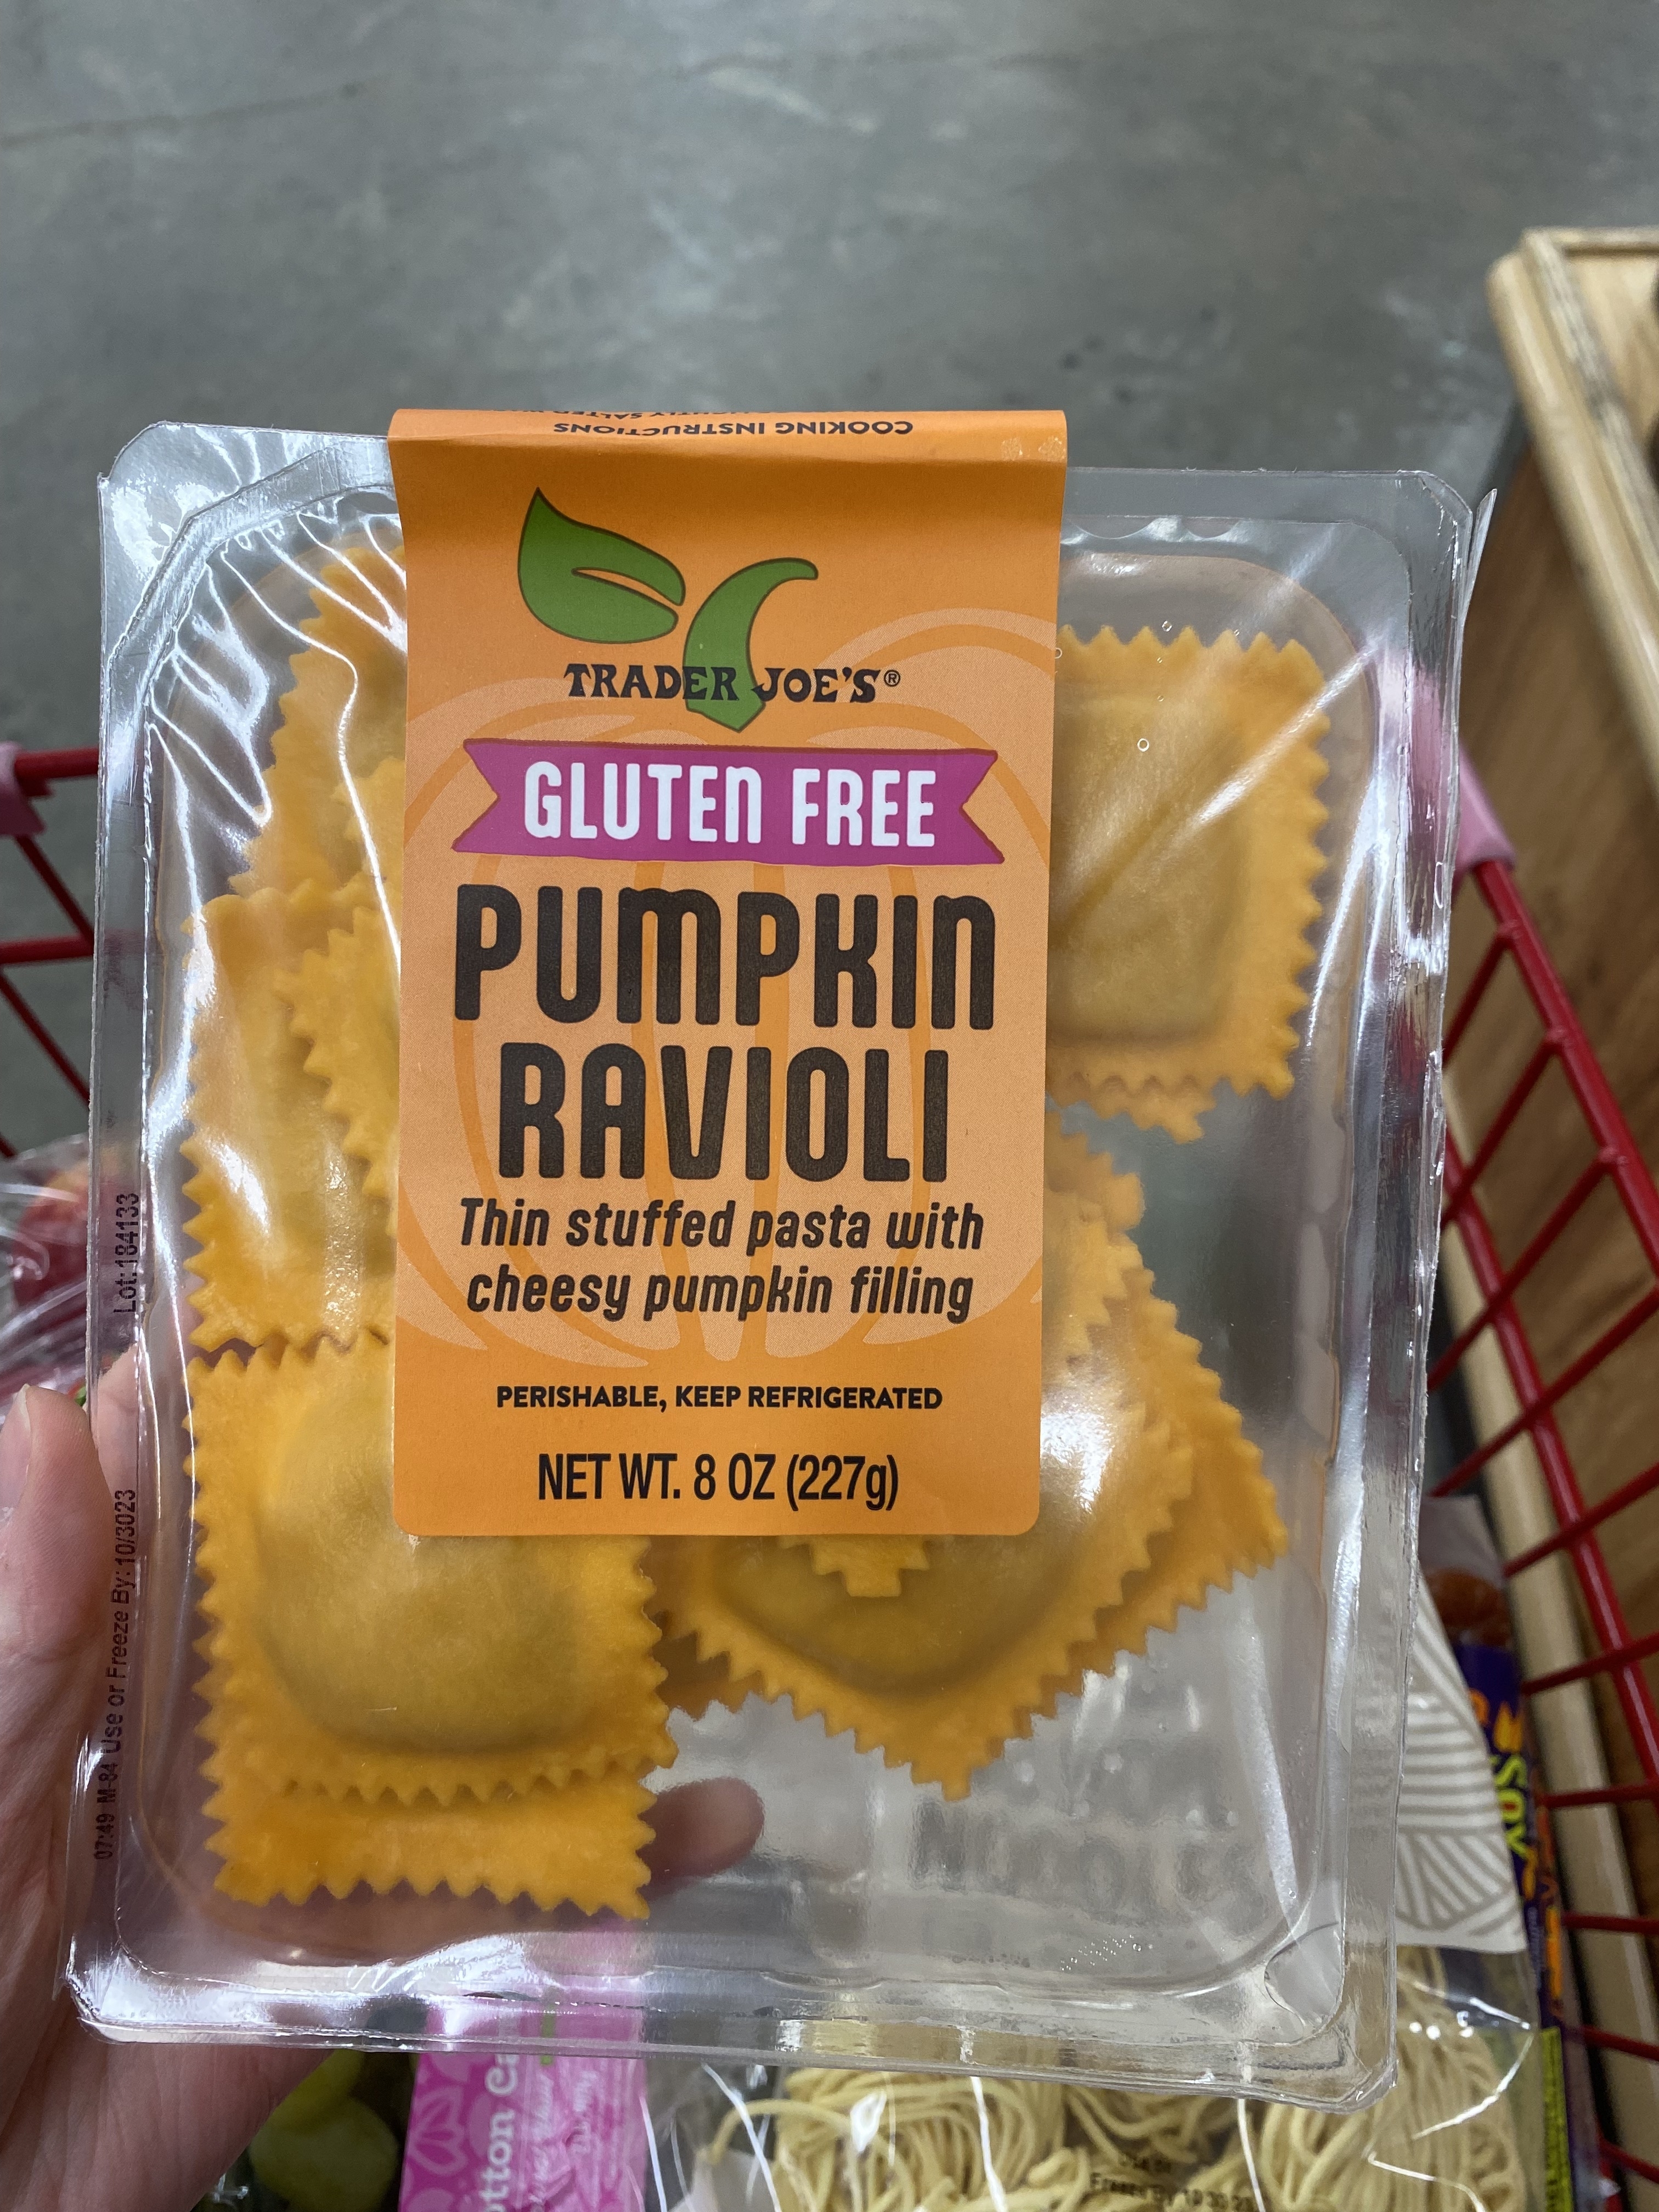 a package of gluten free pumpkin ravioli